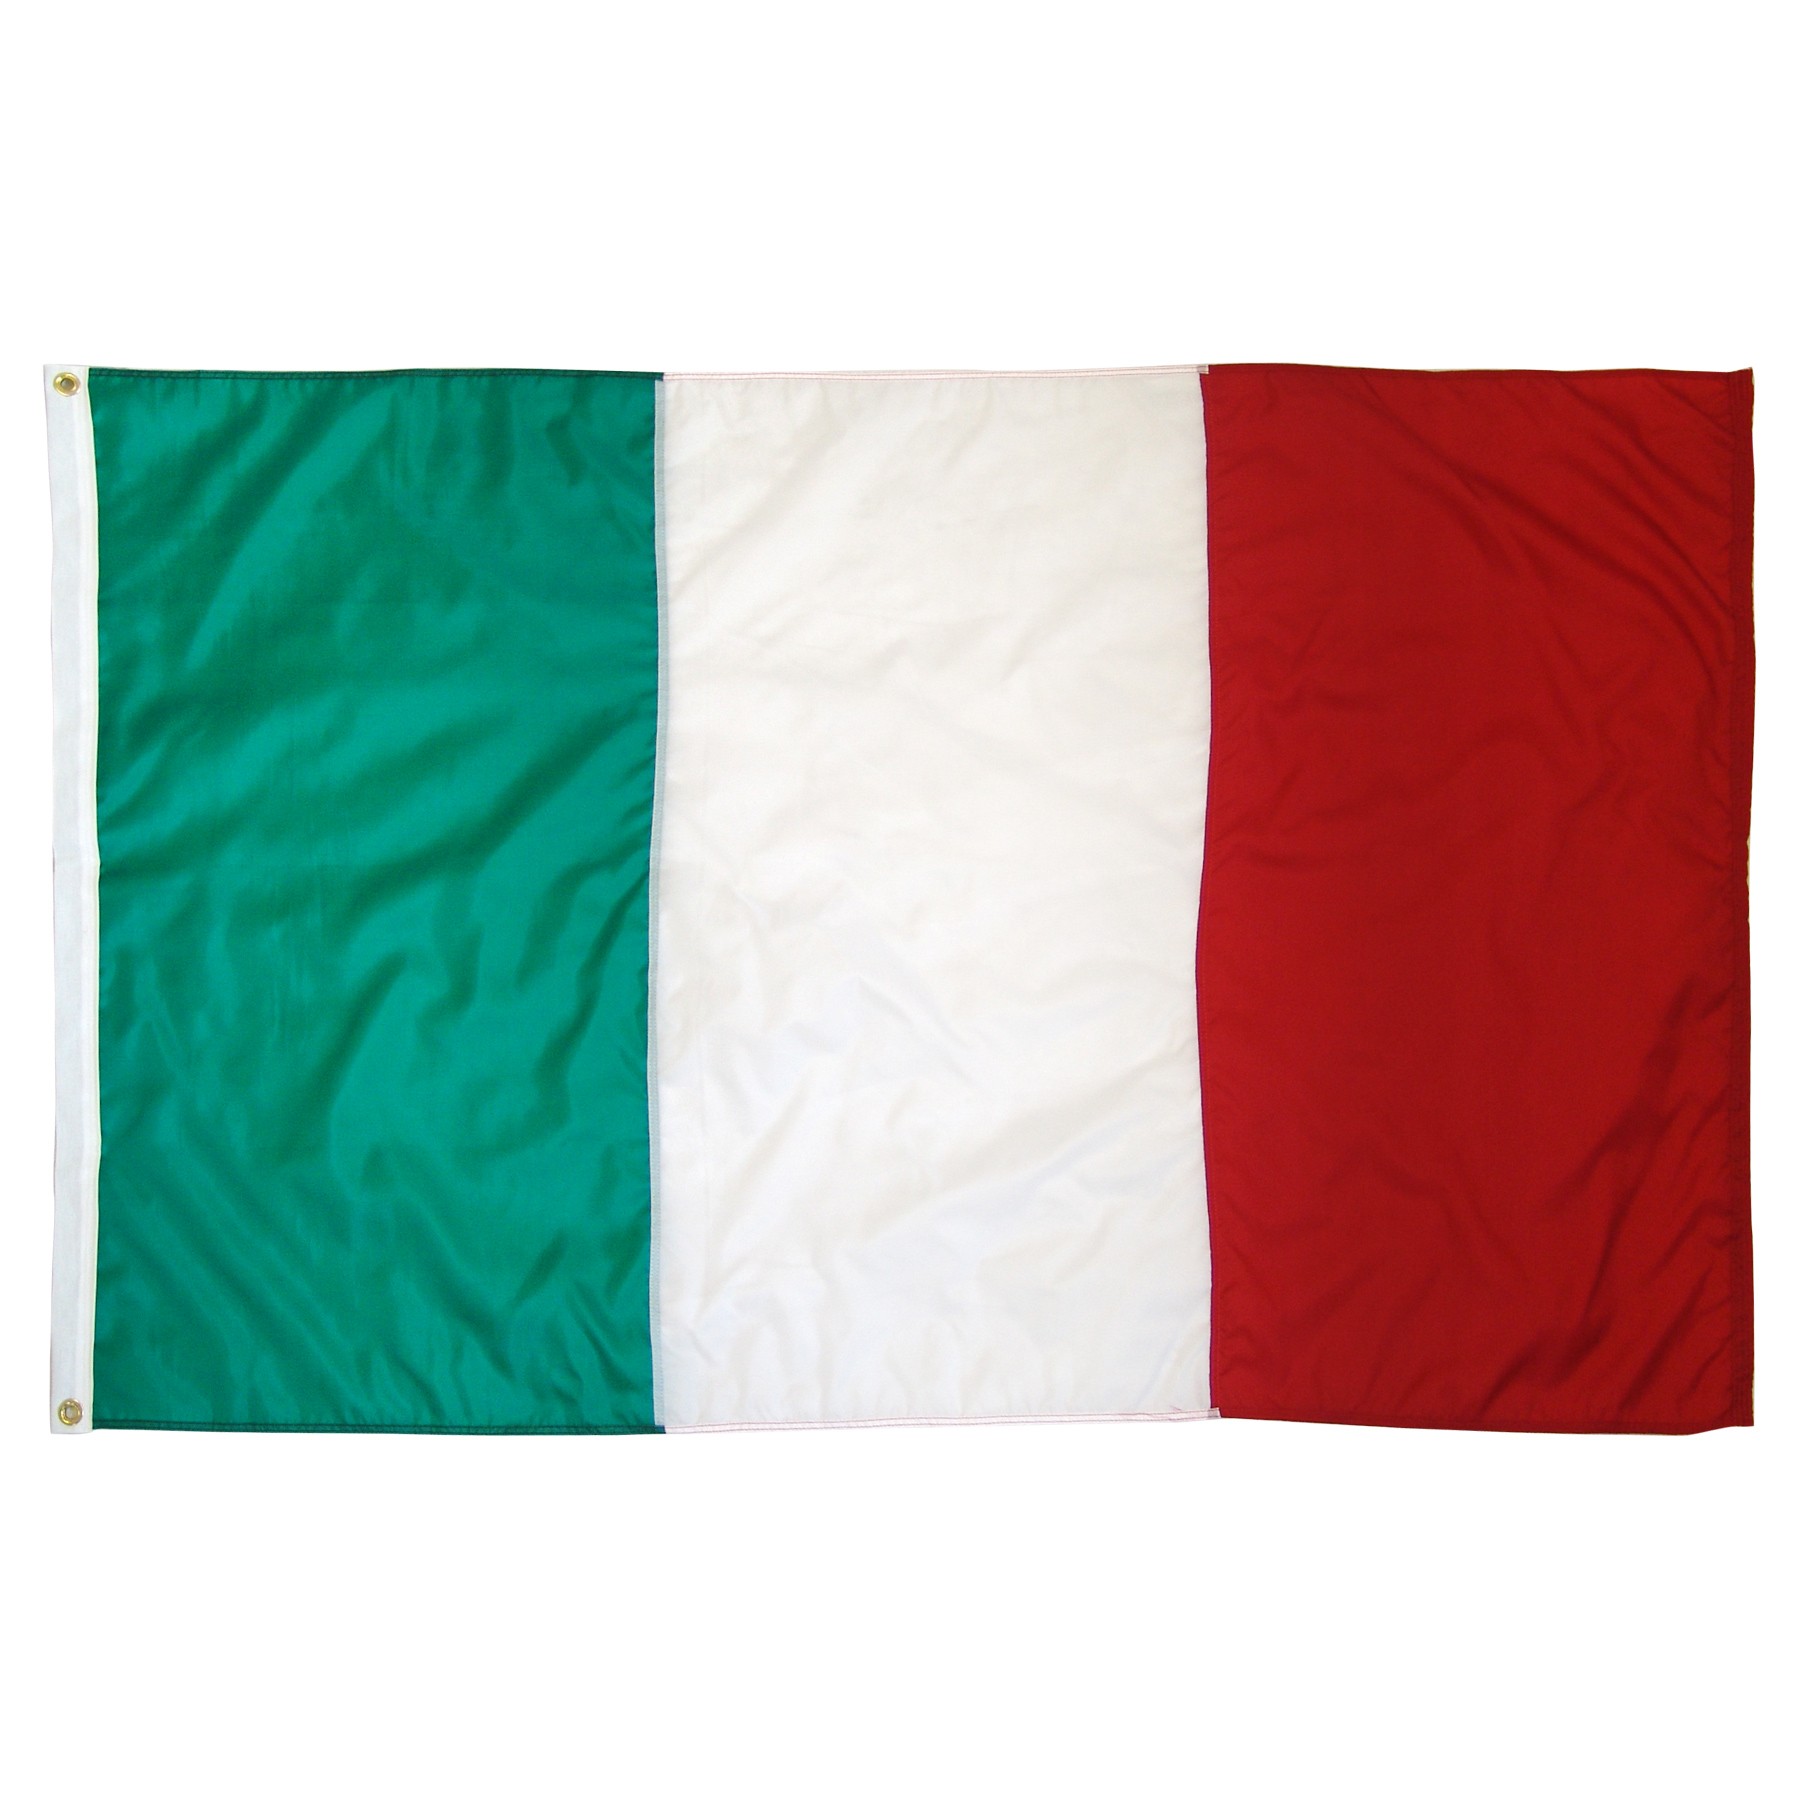 Italy Flag Clip Art - ClipArt Best